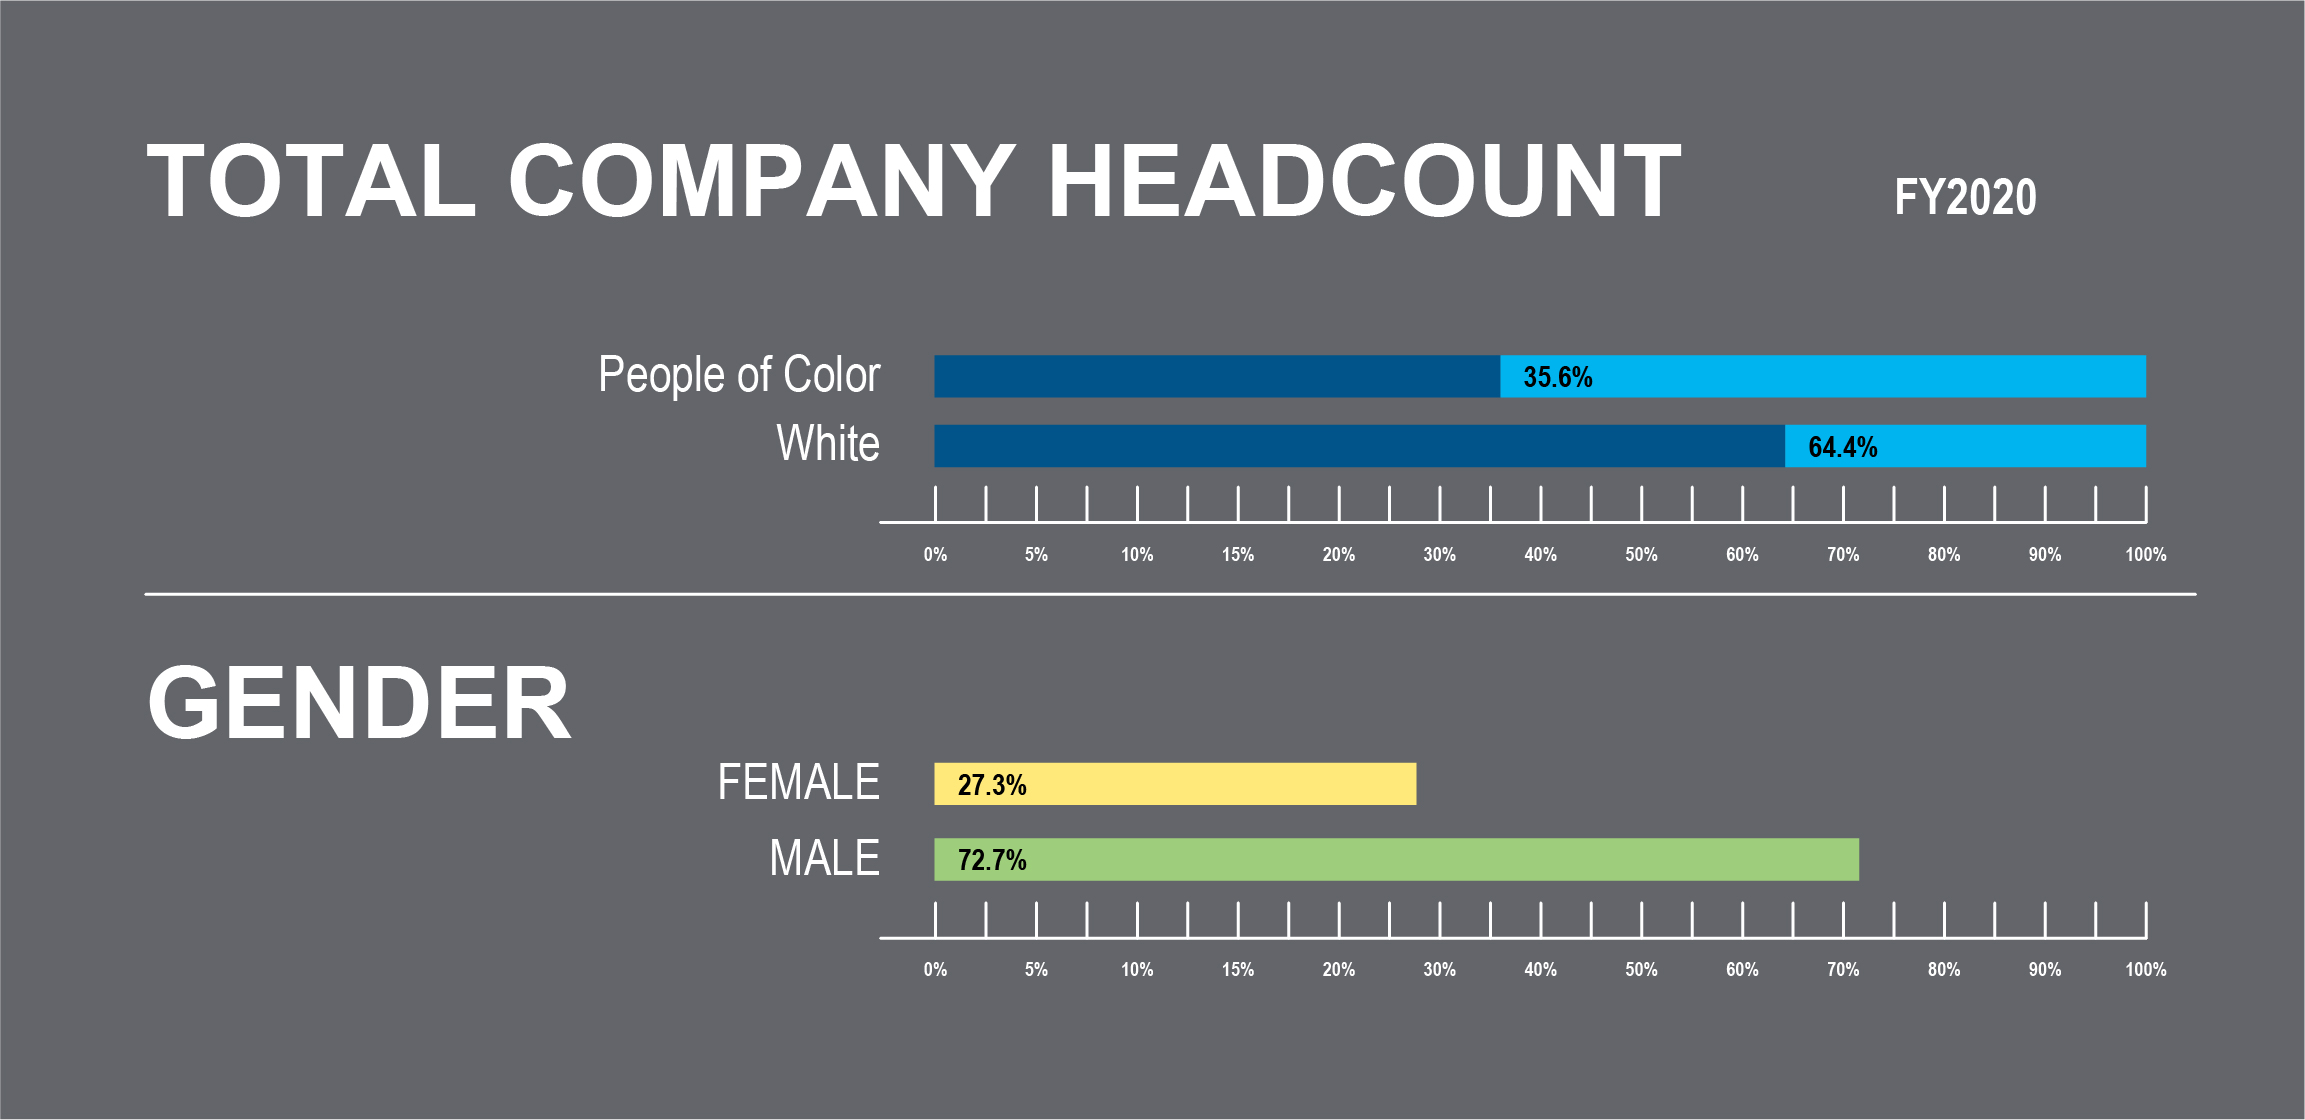 For CSR Report – POC-White Percentages and Gender Percentage_1.jpg 